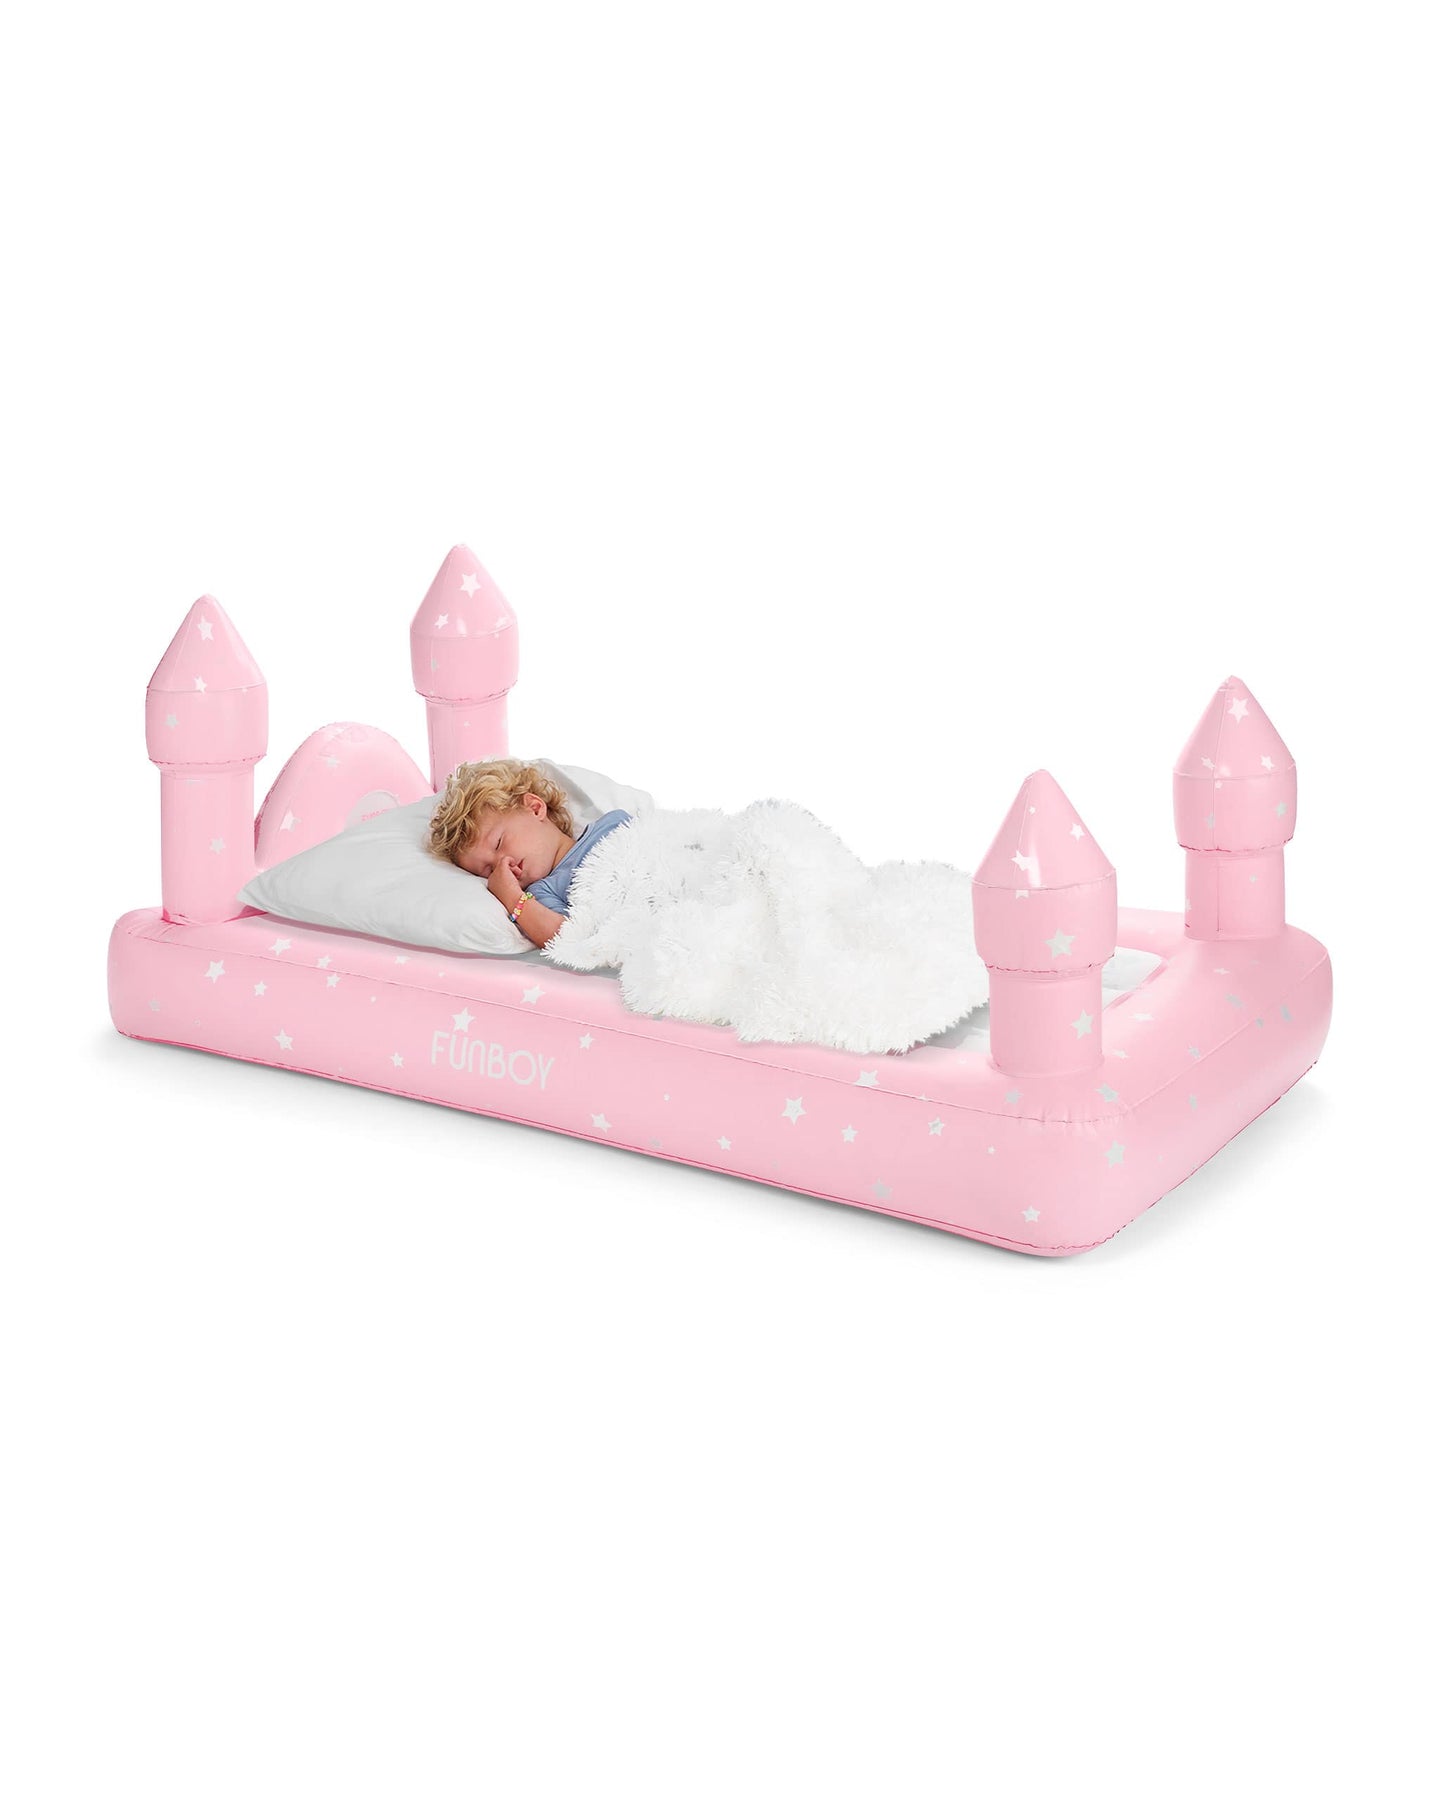 Kids Air Mattress - Pink Castle Sleepover Bed